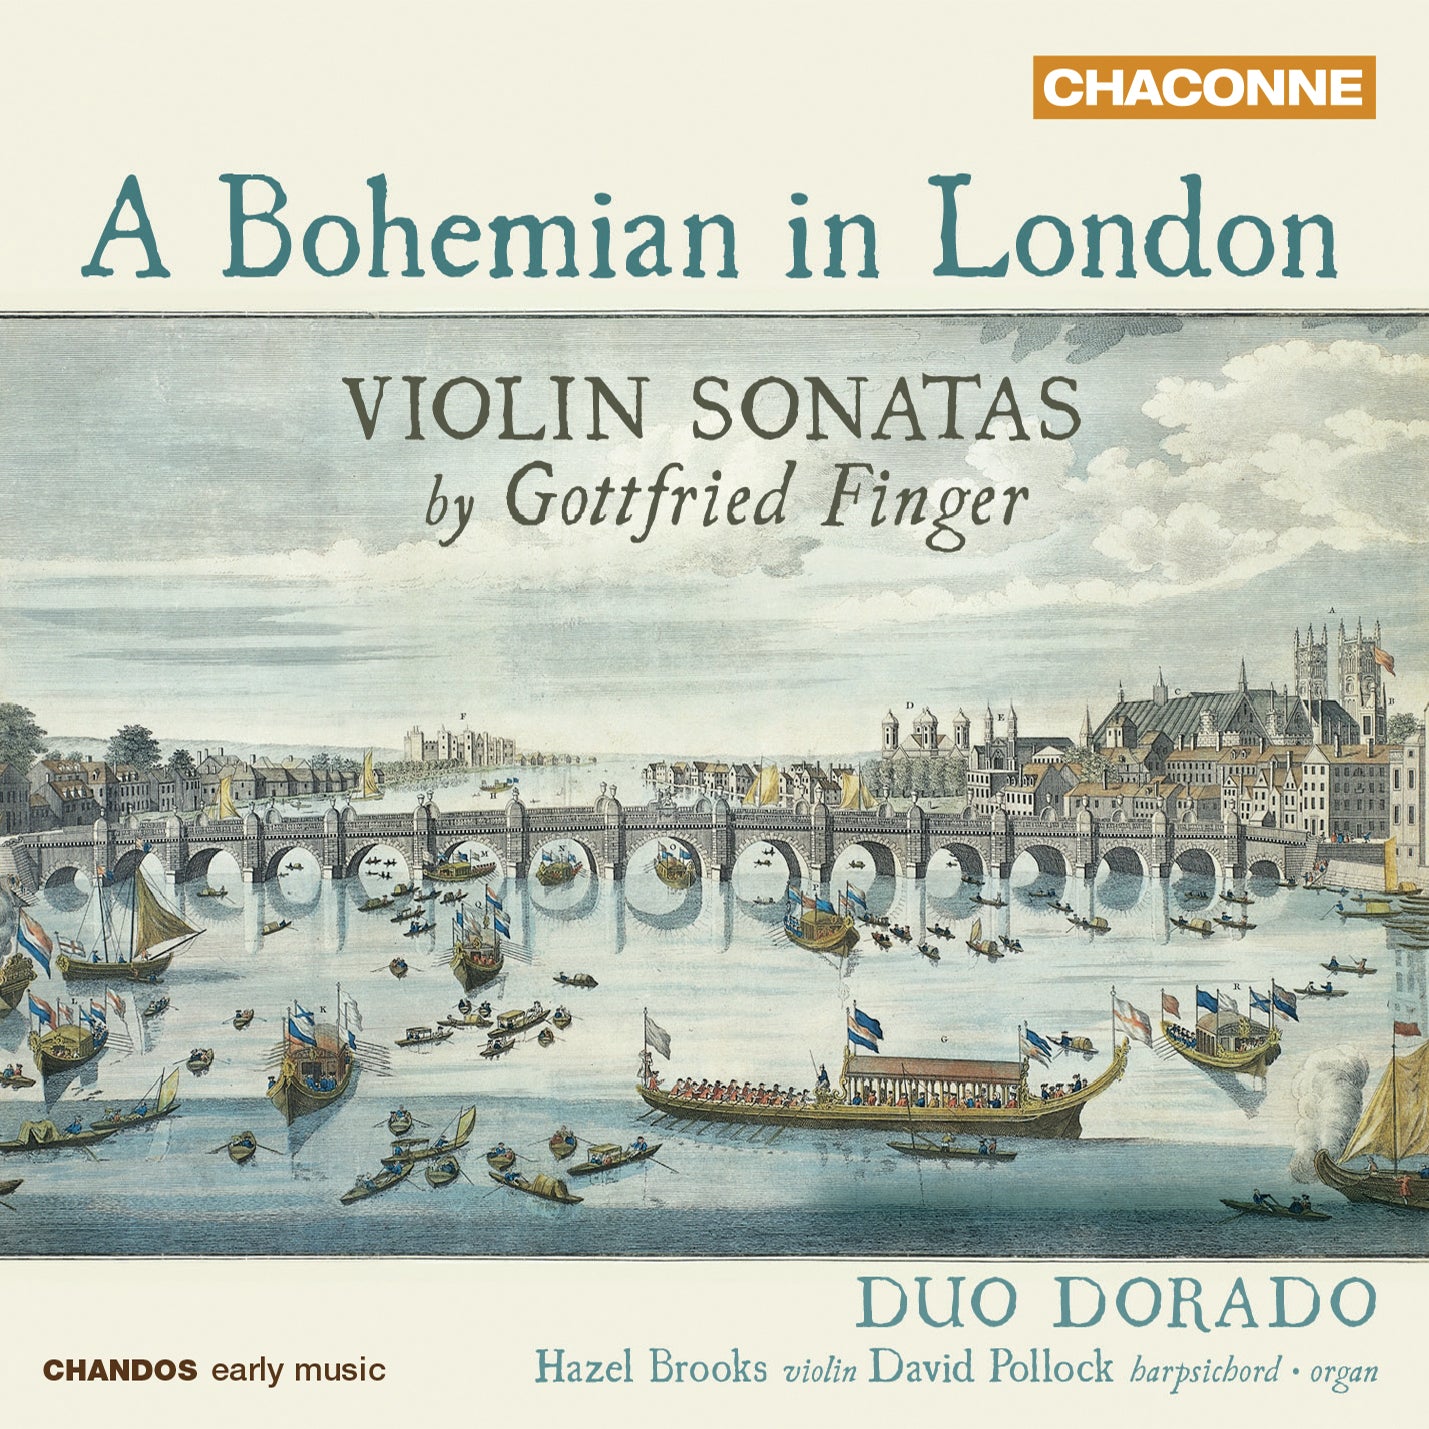 A Bohemian in London: Violin Sonatas by Gottfried Finger / Duo Dorado